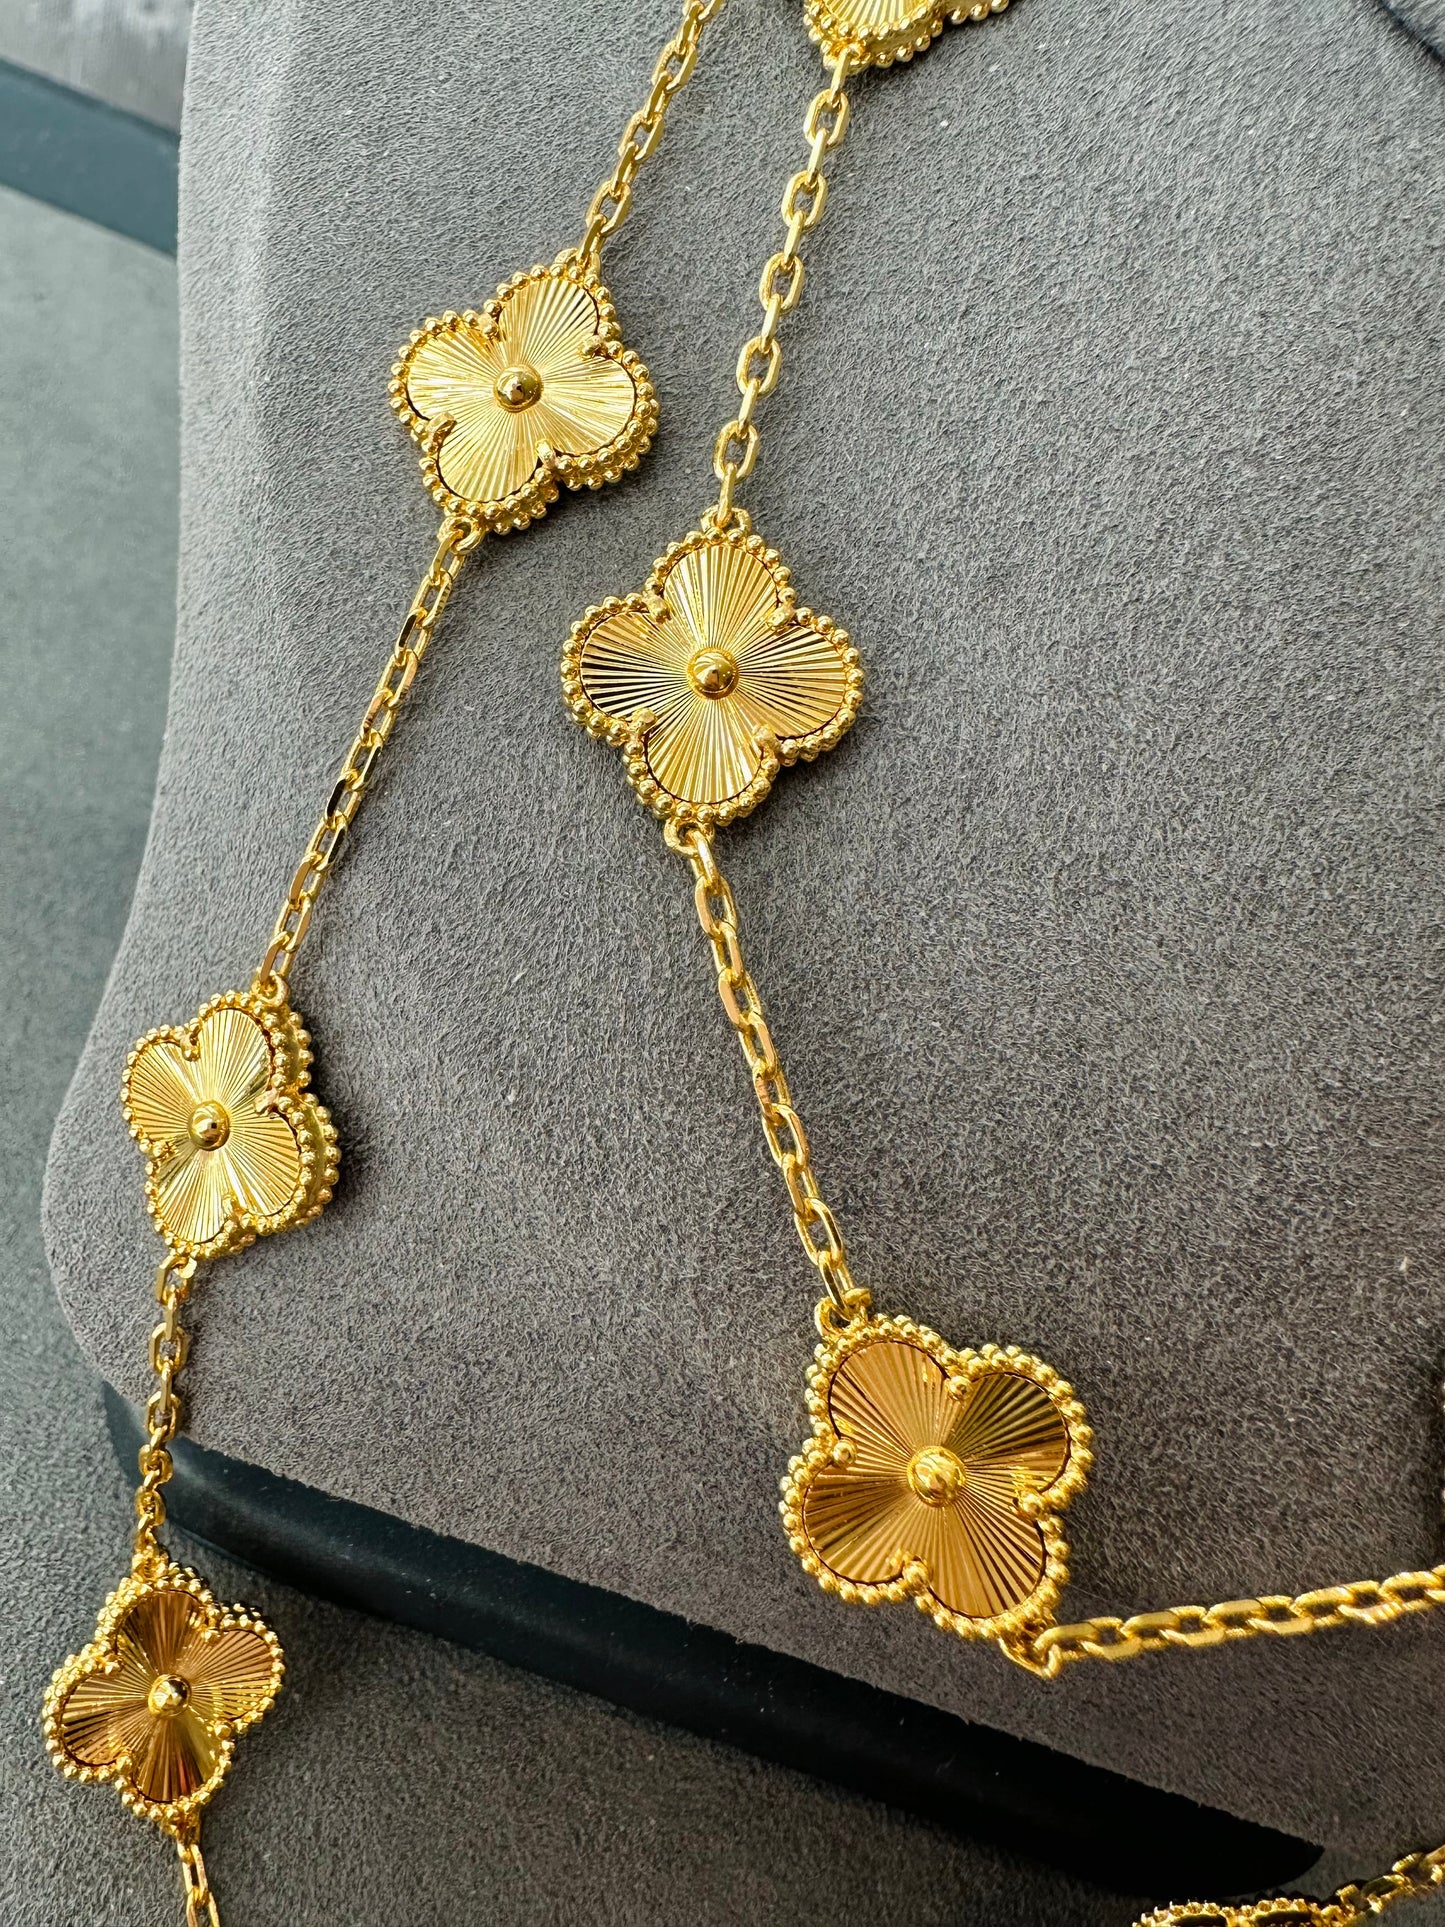 Guilliche 20 motif clover necklace 925 silver 18k gold plated 84 cm long clover size 15mm - ParadiseKissCo